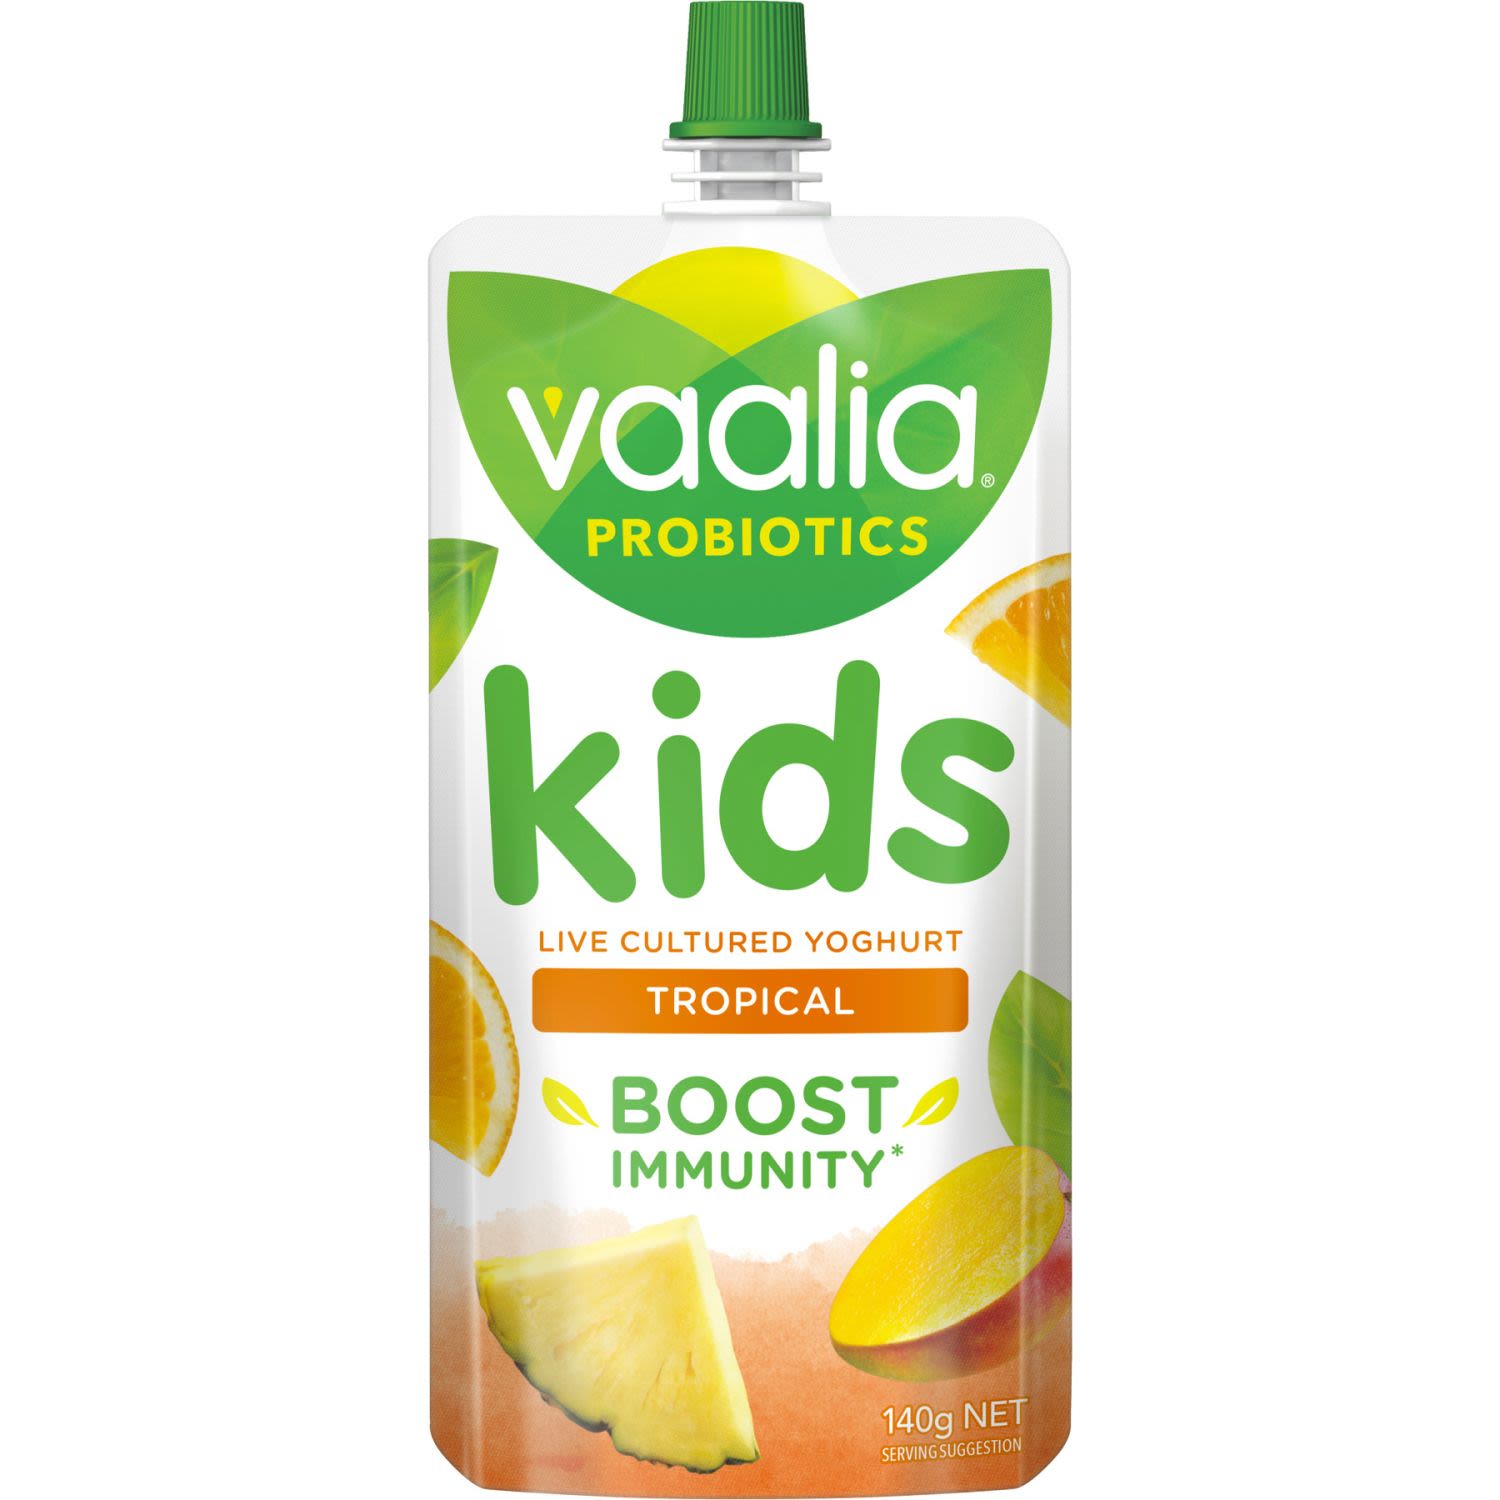 Vaalia Kids Probiotic Yoghurt Tropical Pouch, 140 Gram